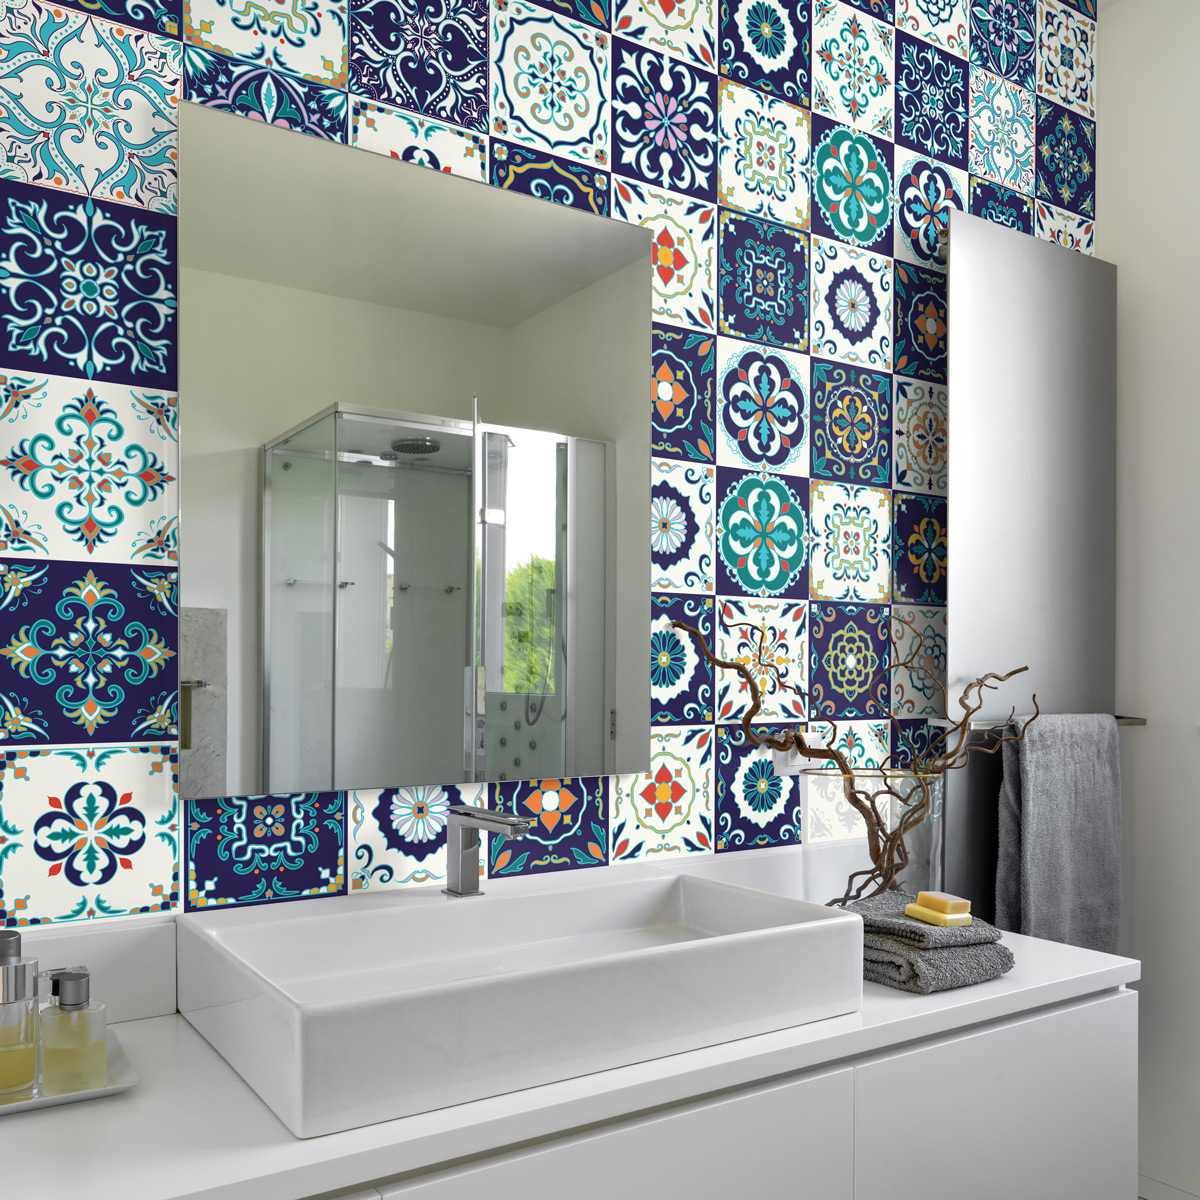 60 wall decal tiles azulejos antoinetta